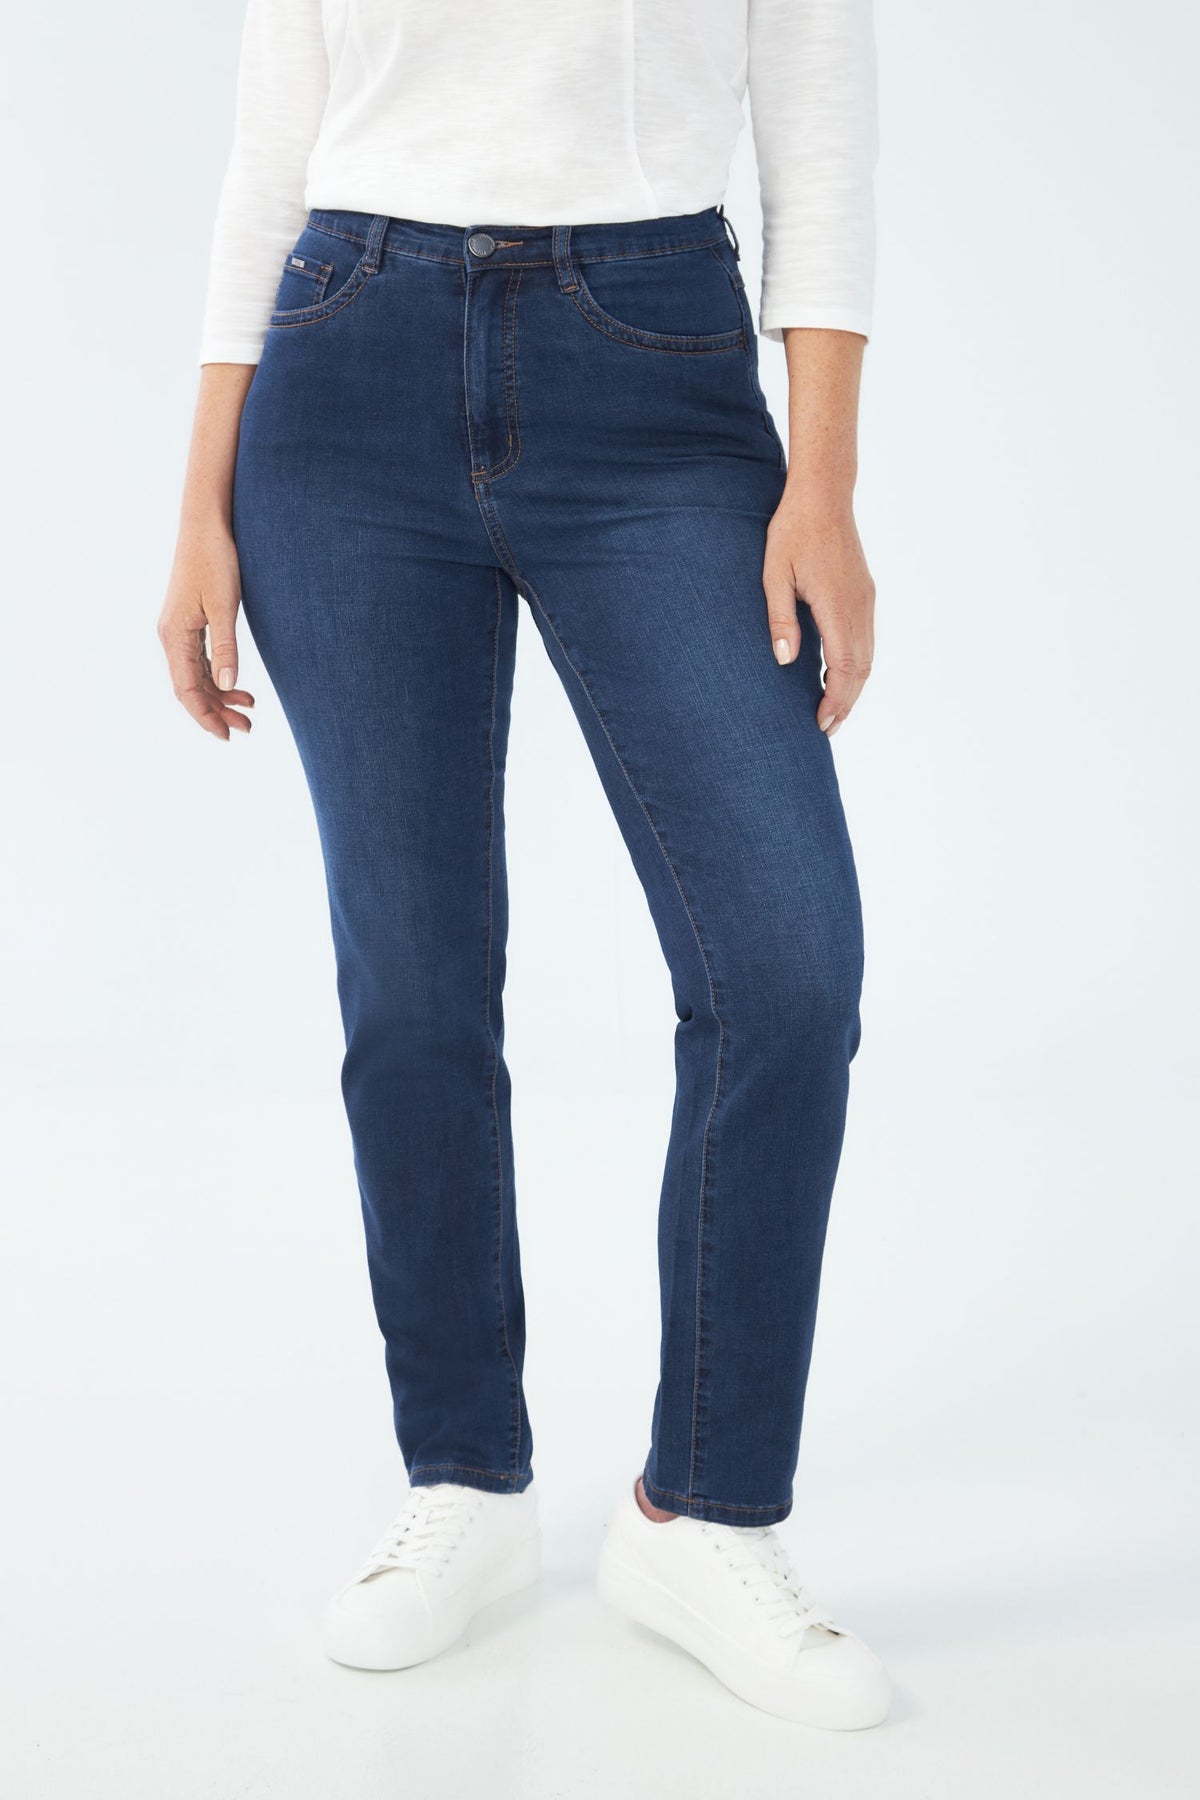 FDJ Petite Suzanne Slim Leg Jean - Style 8473250, front, delight